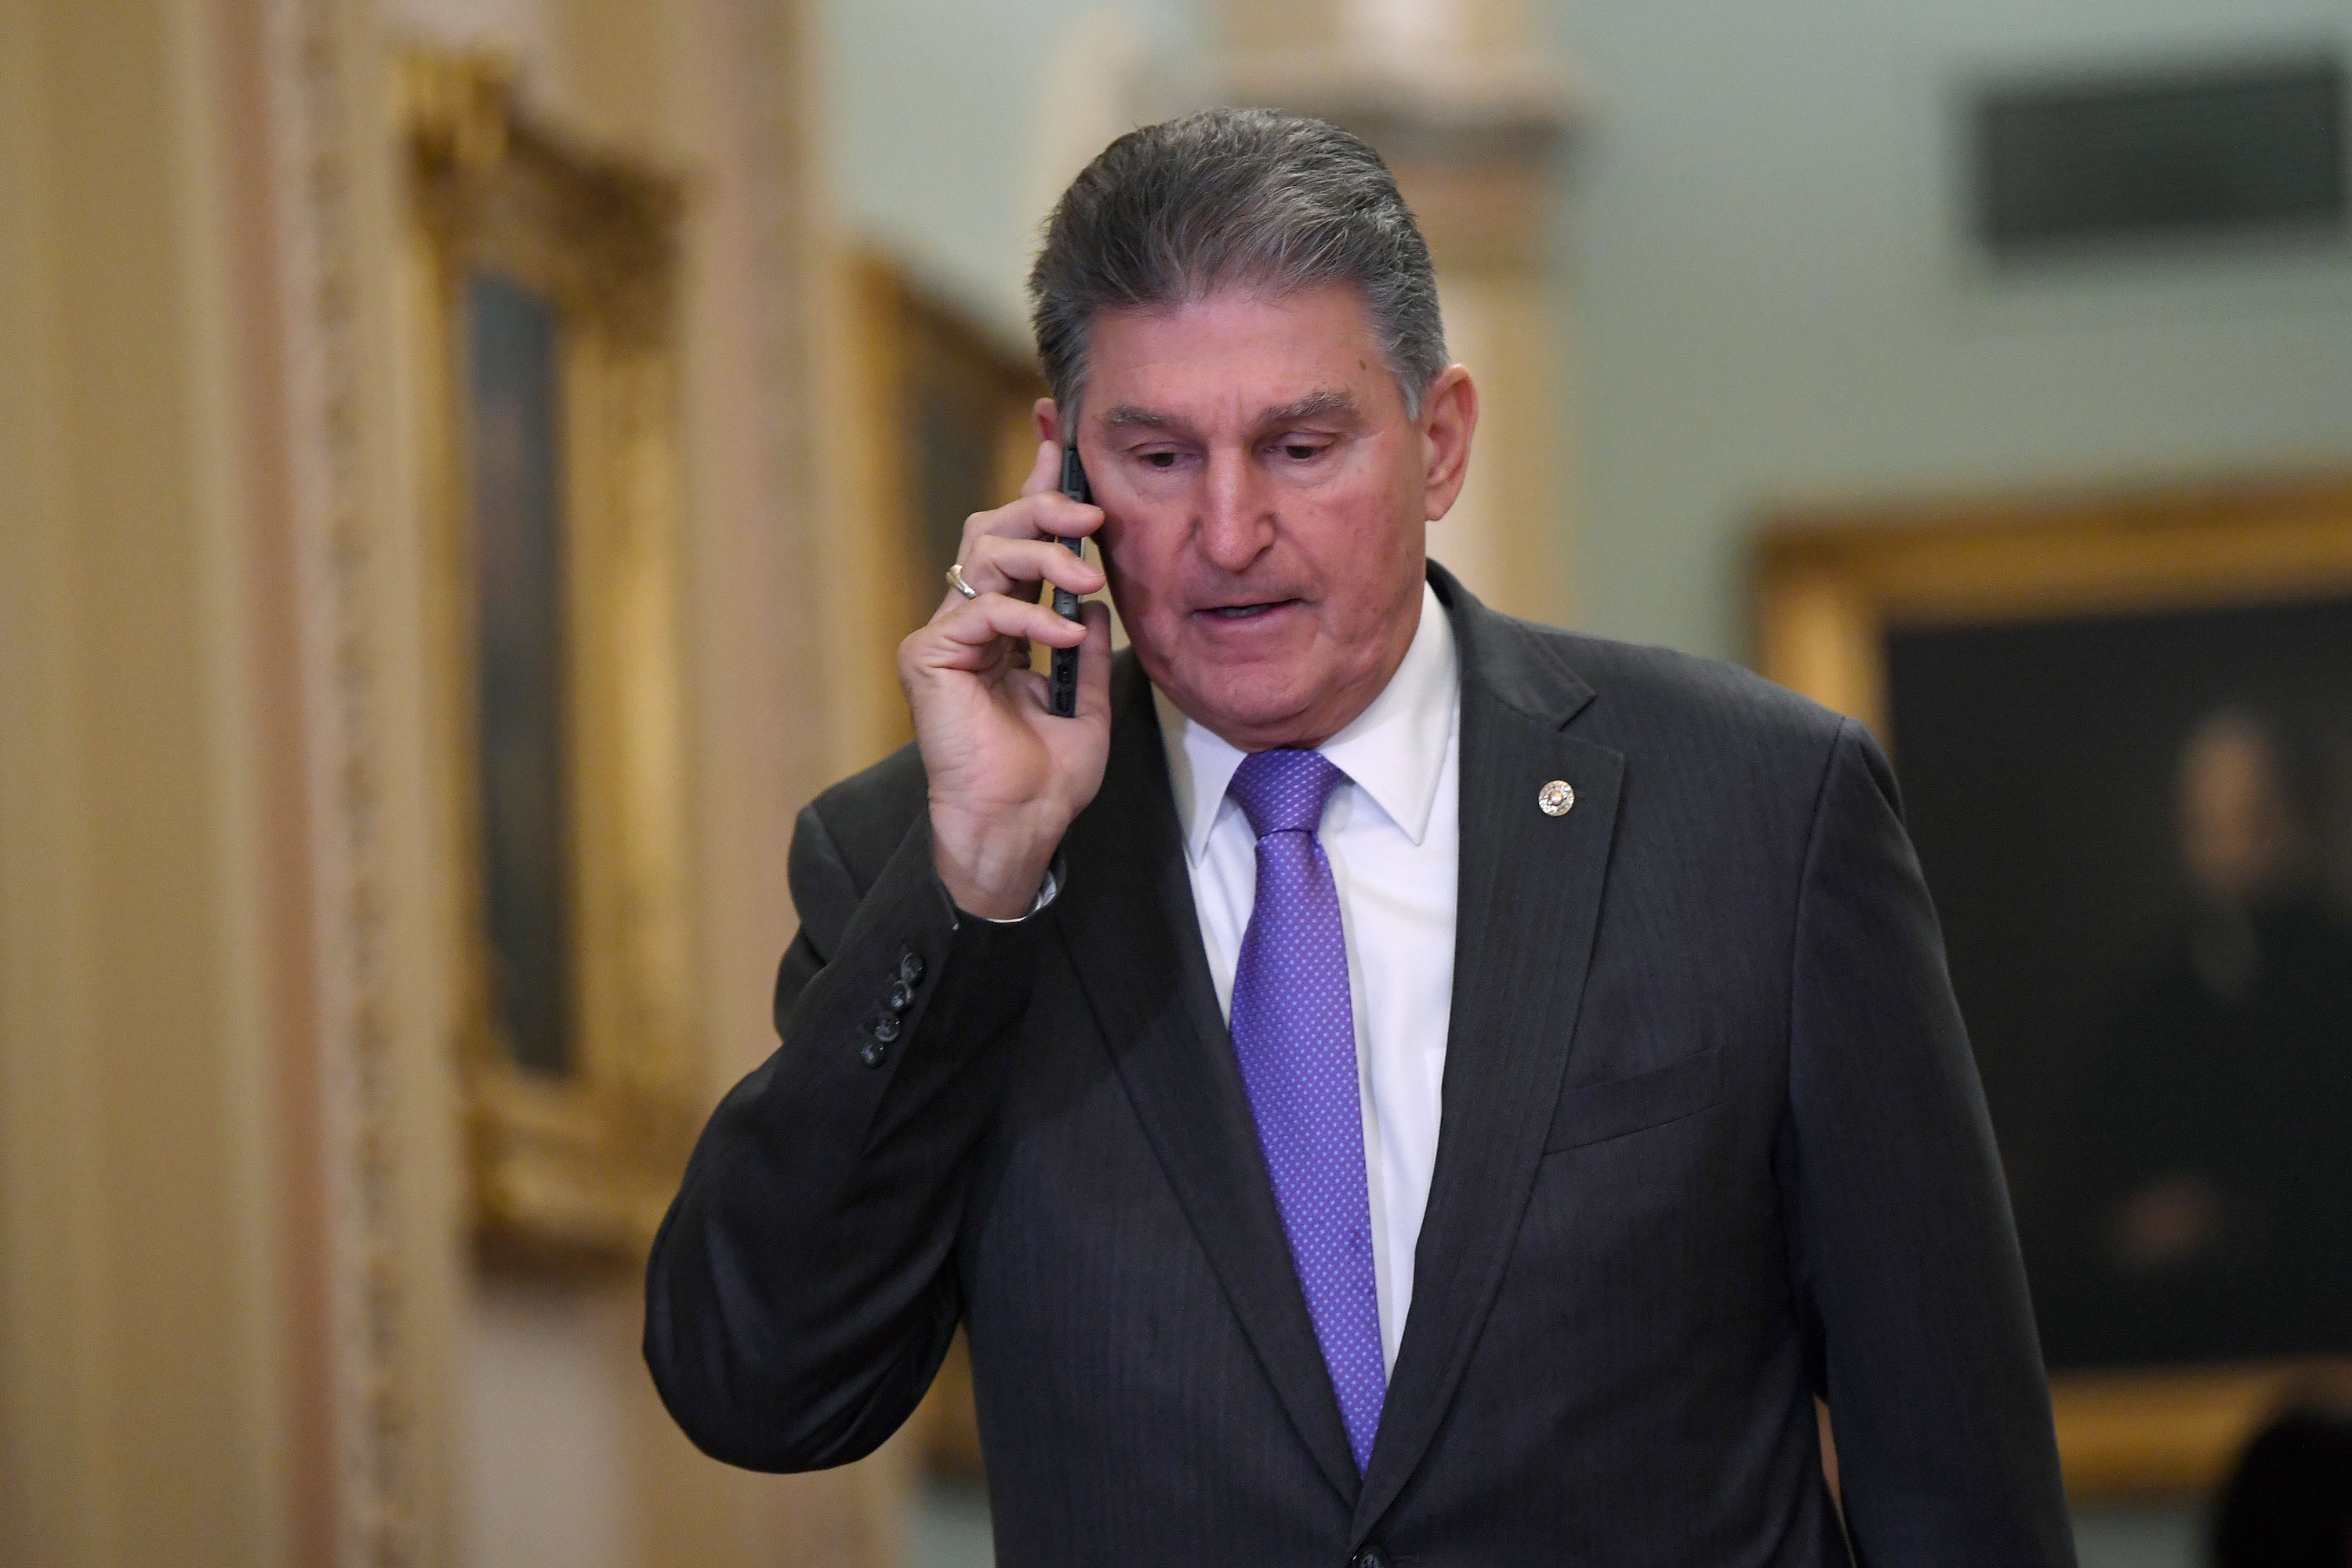 Sen. Joe Manchin talks on his phone Monday as he walks on Capitol Hill.